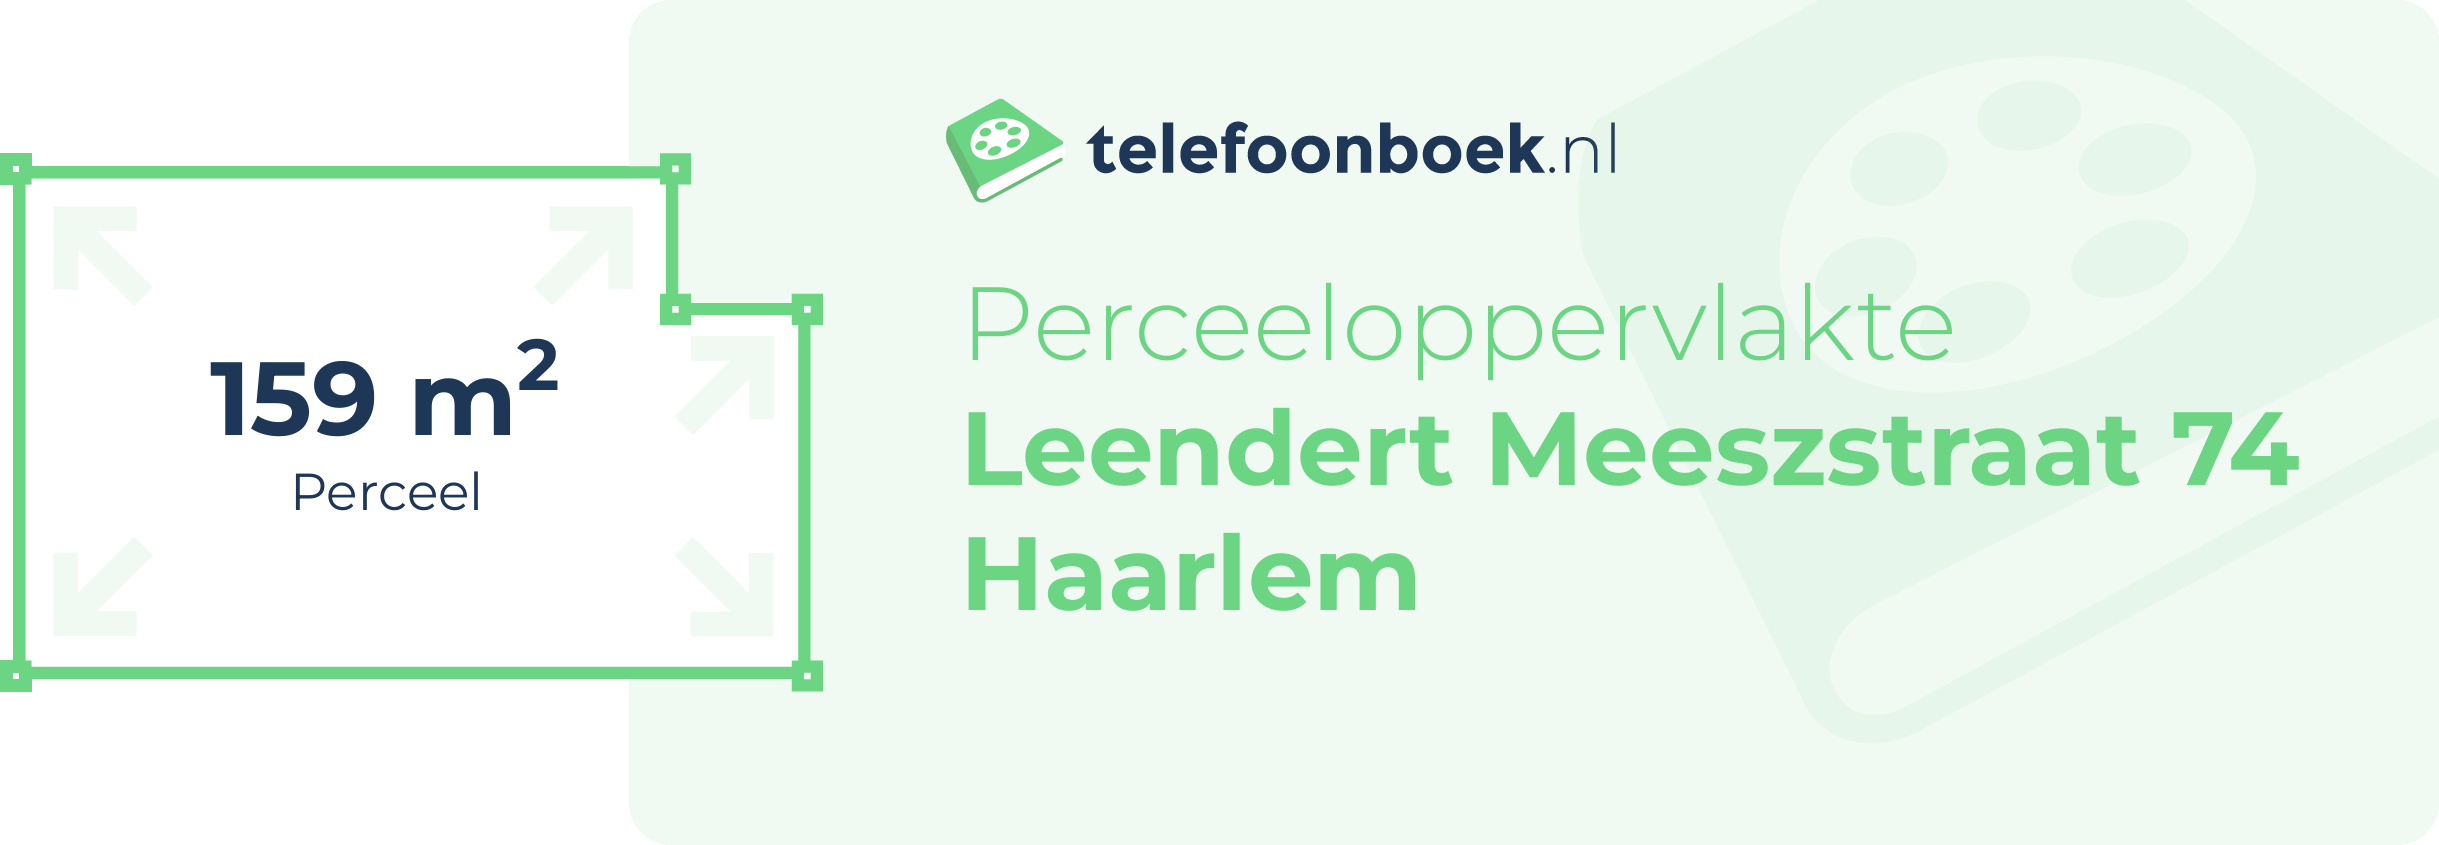 Perceeloppervlakte Leendert Meeszstraat 74 Haarlem